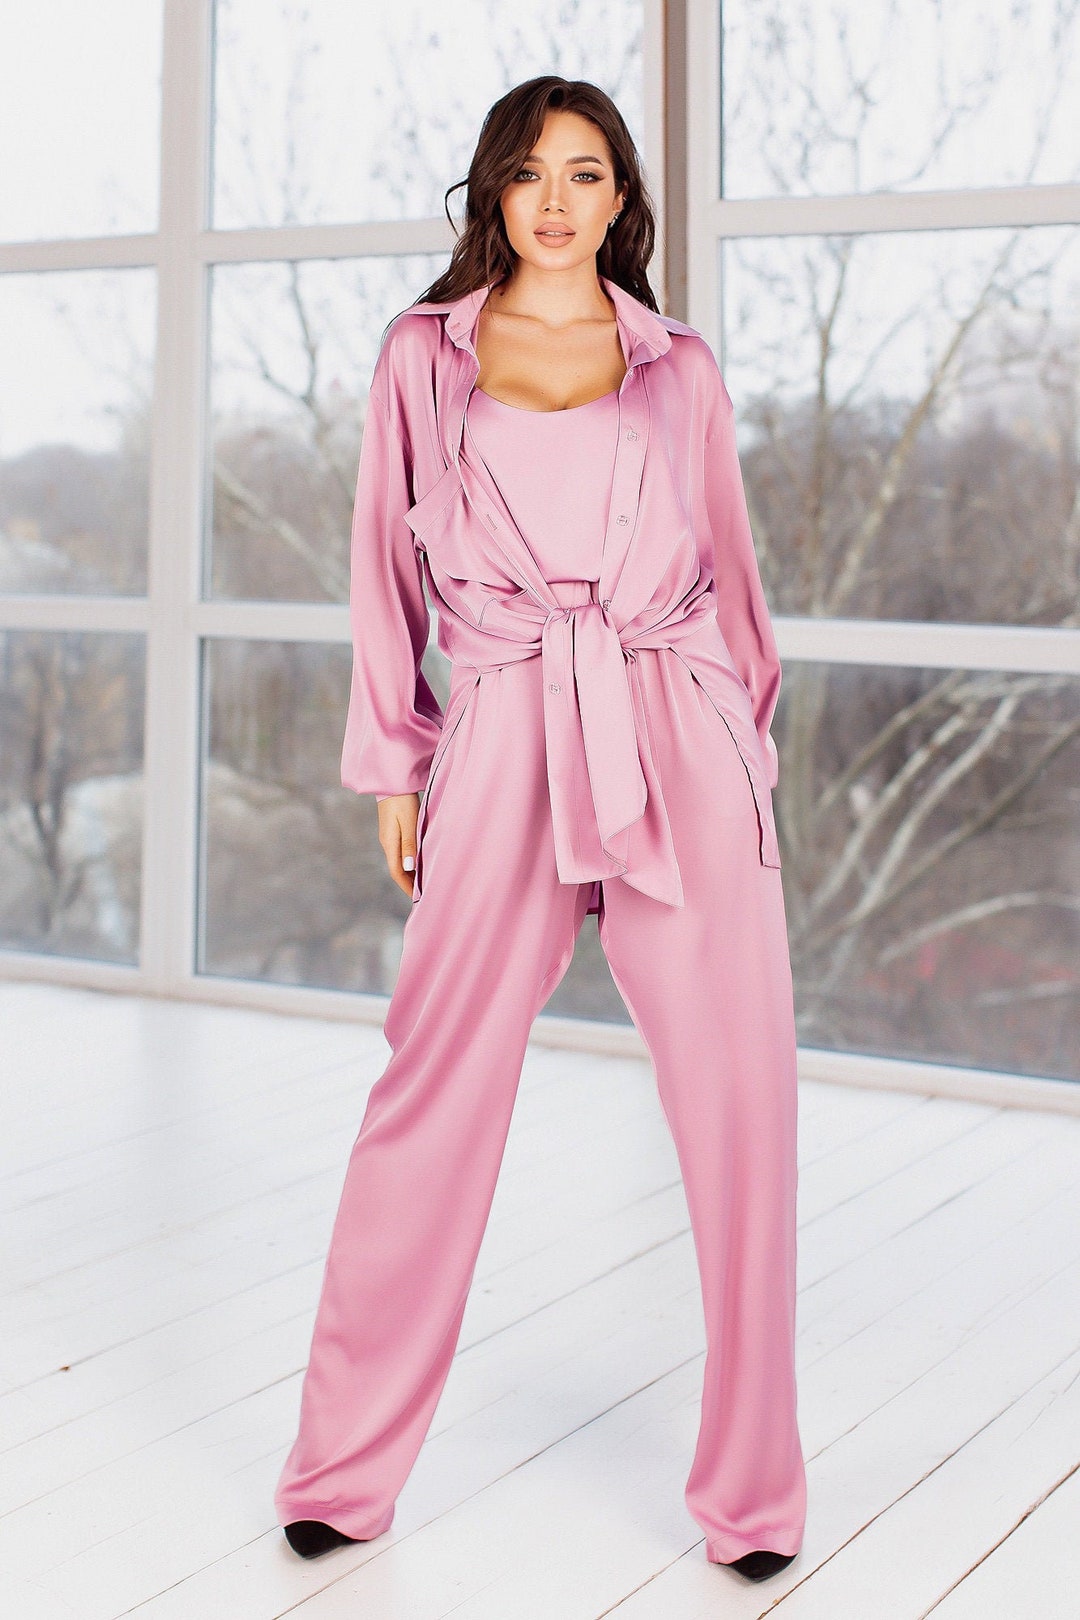 Blush Pink Silk Pant Suit for Women, Satin Three Piece Summer Set - Etsy